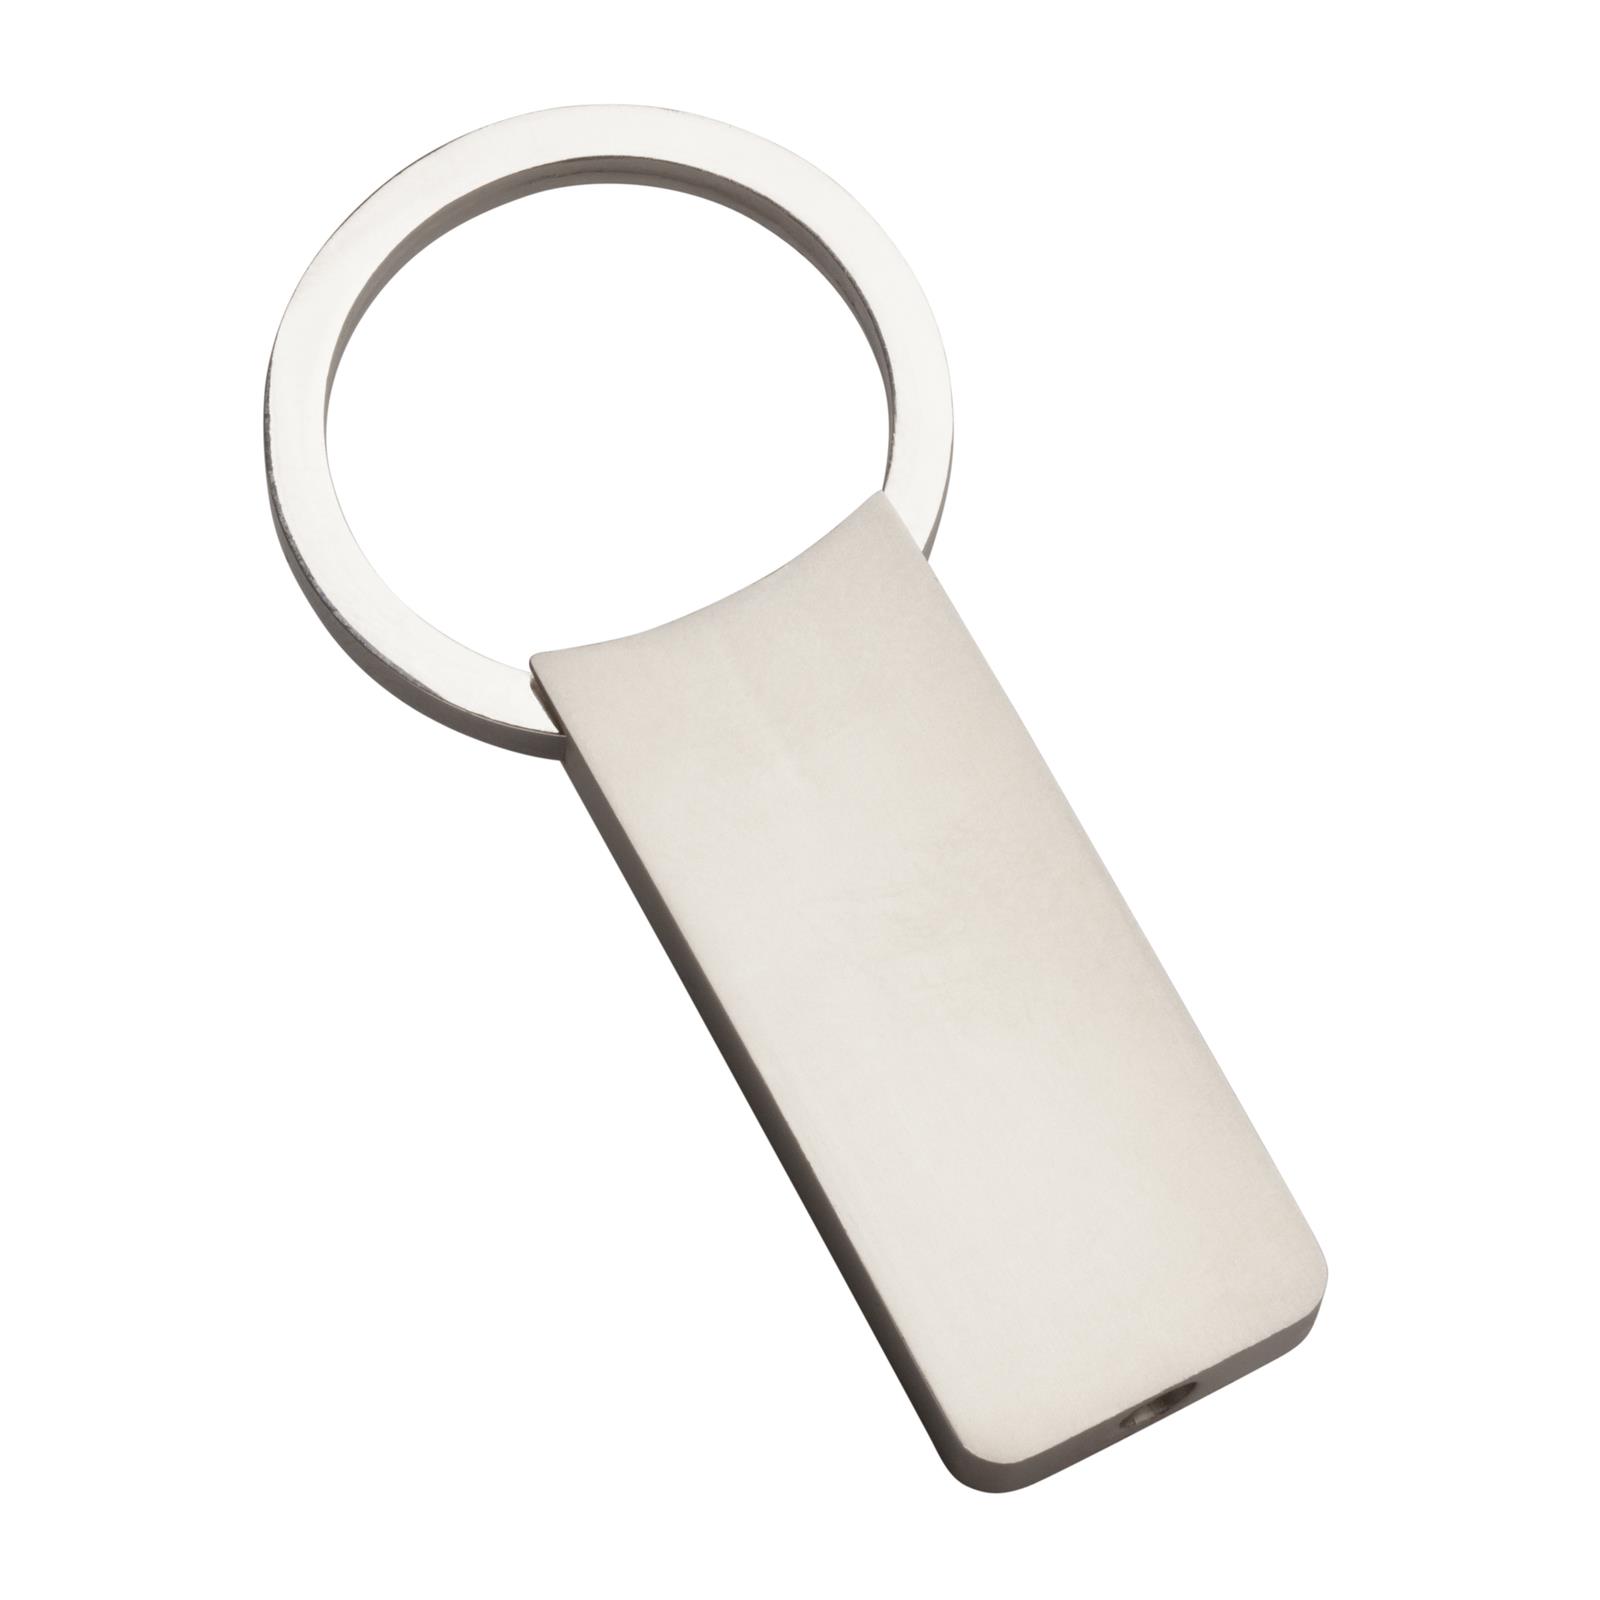 Schlüsselanhänger RE98-CLASSIC LARGE